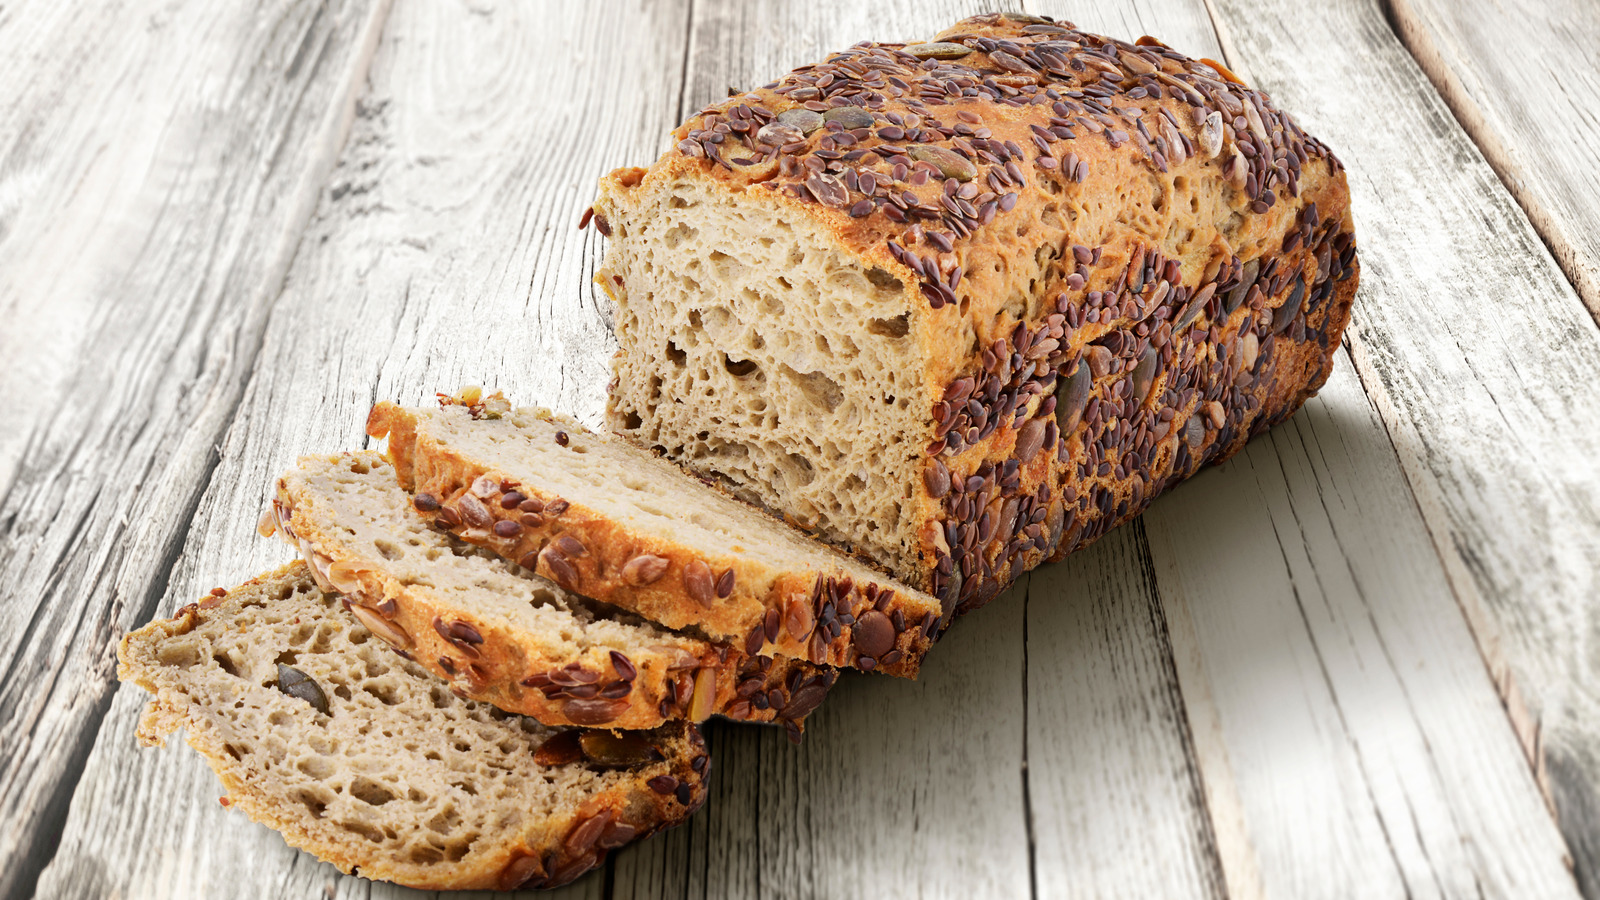 Multigrain bread is good for you.